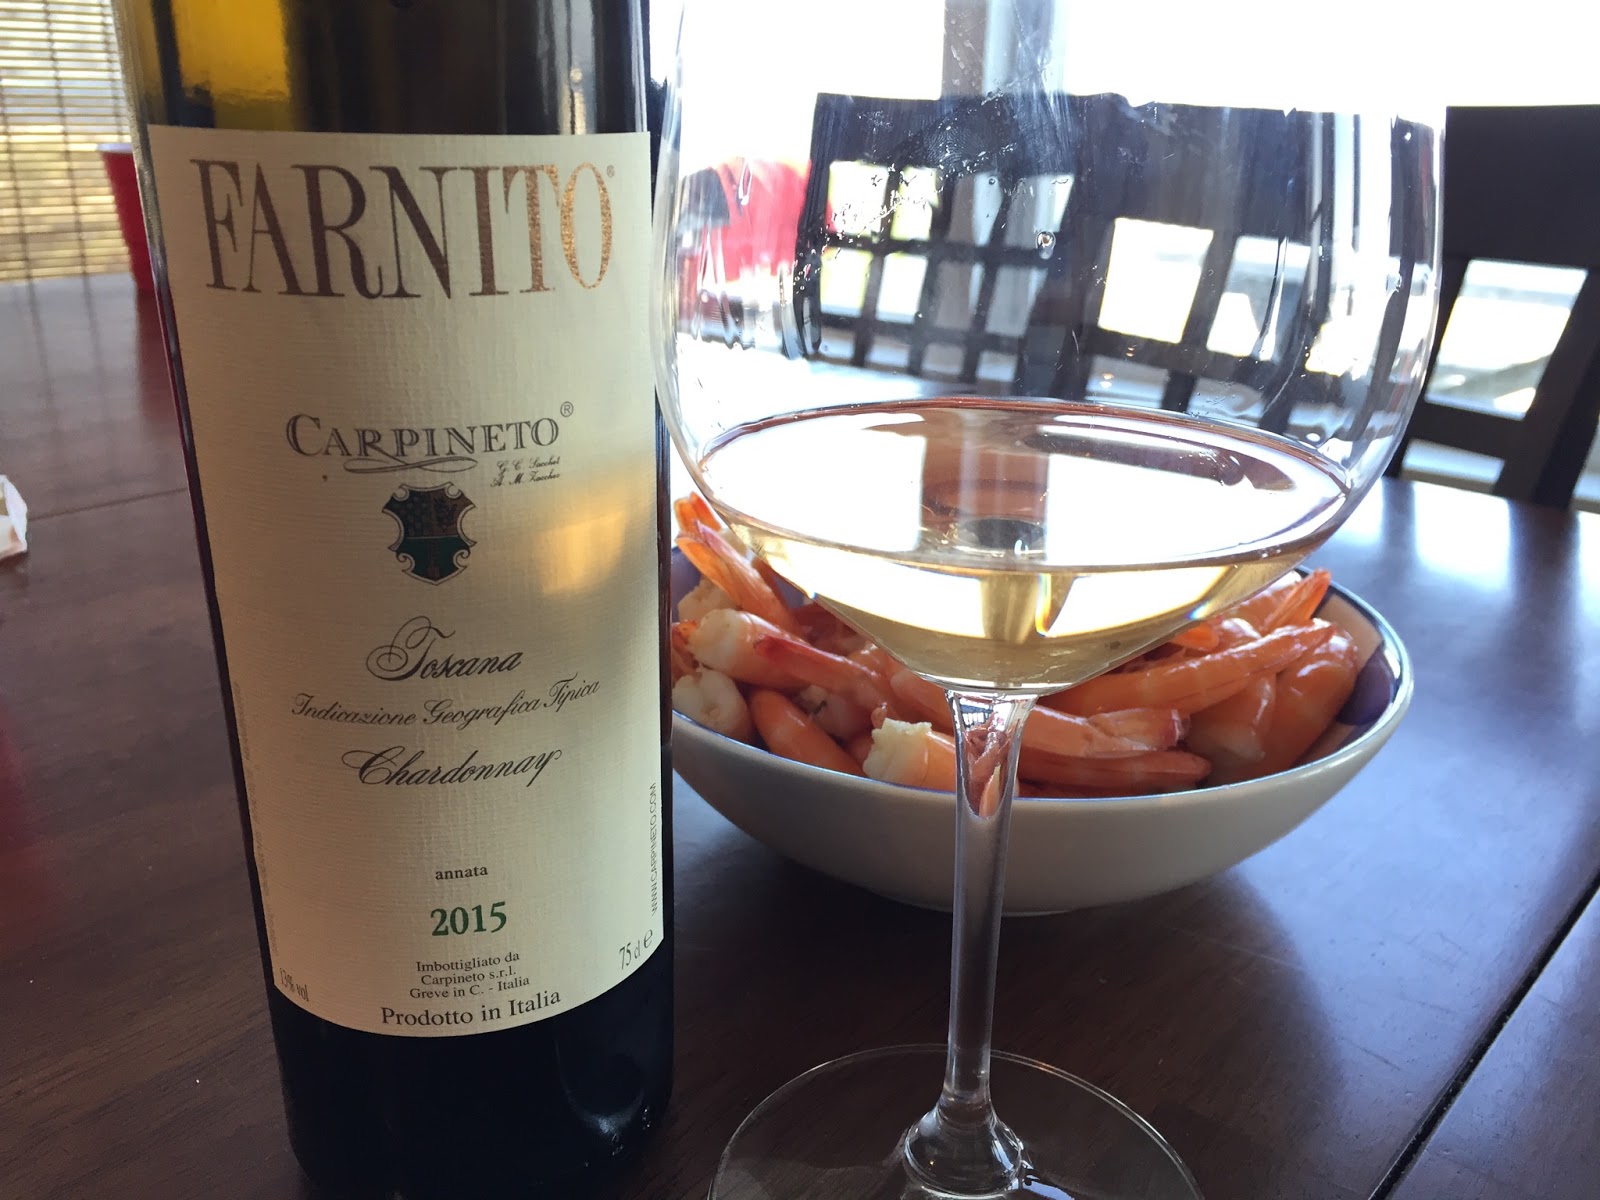 Rượu vang Carpineto Farnito Chardonnay